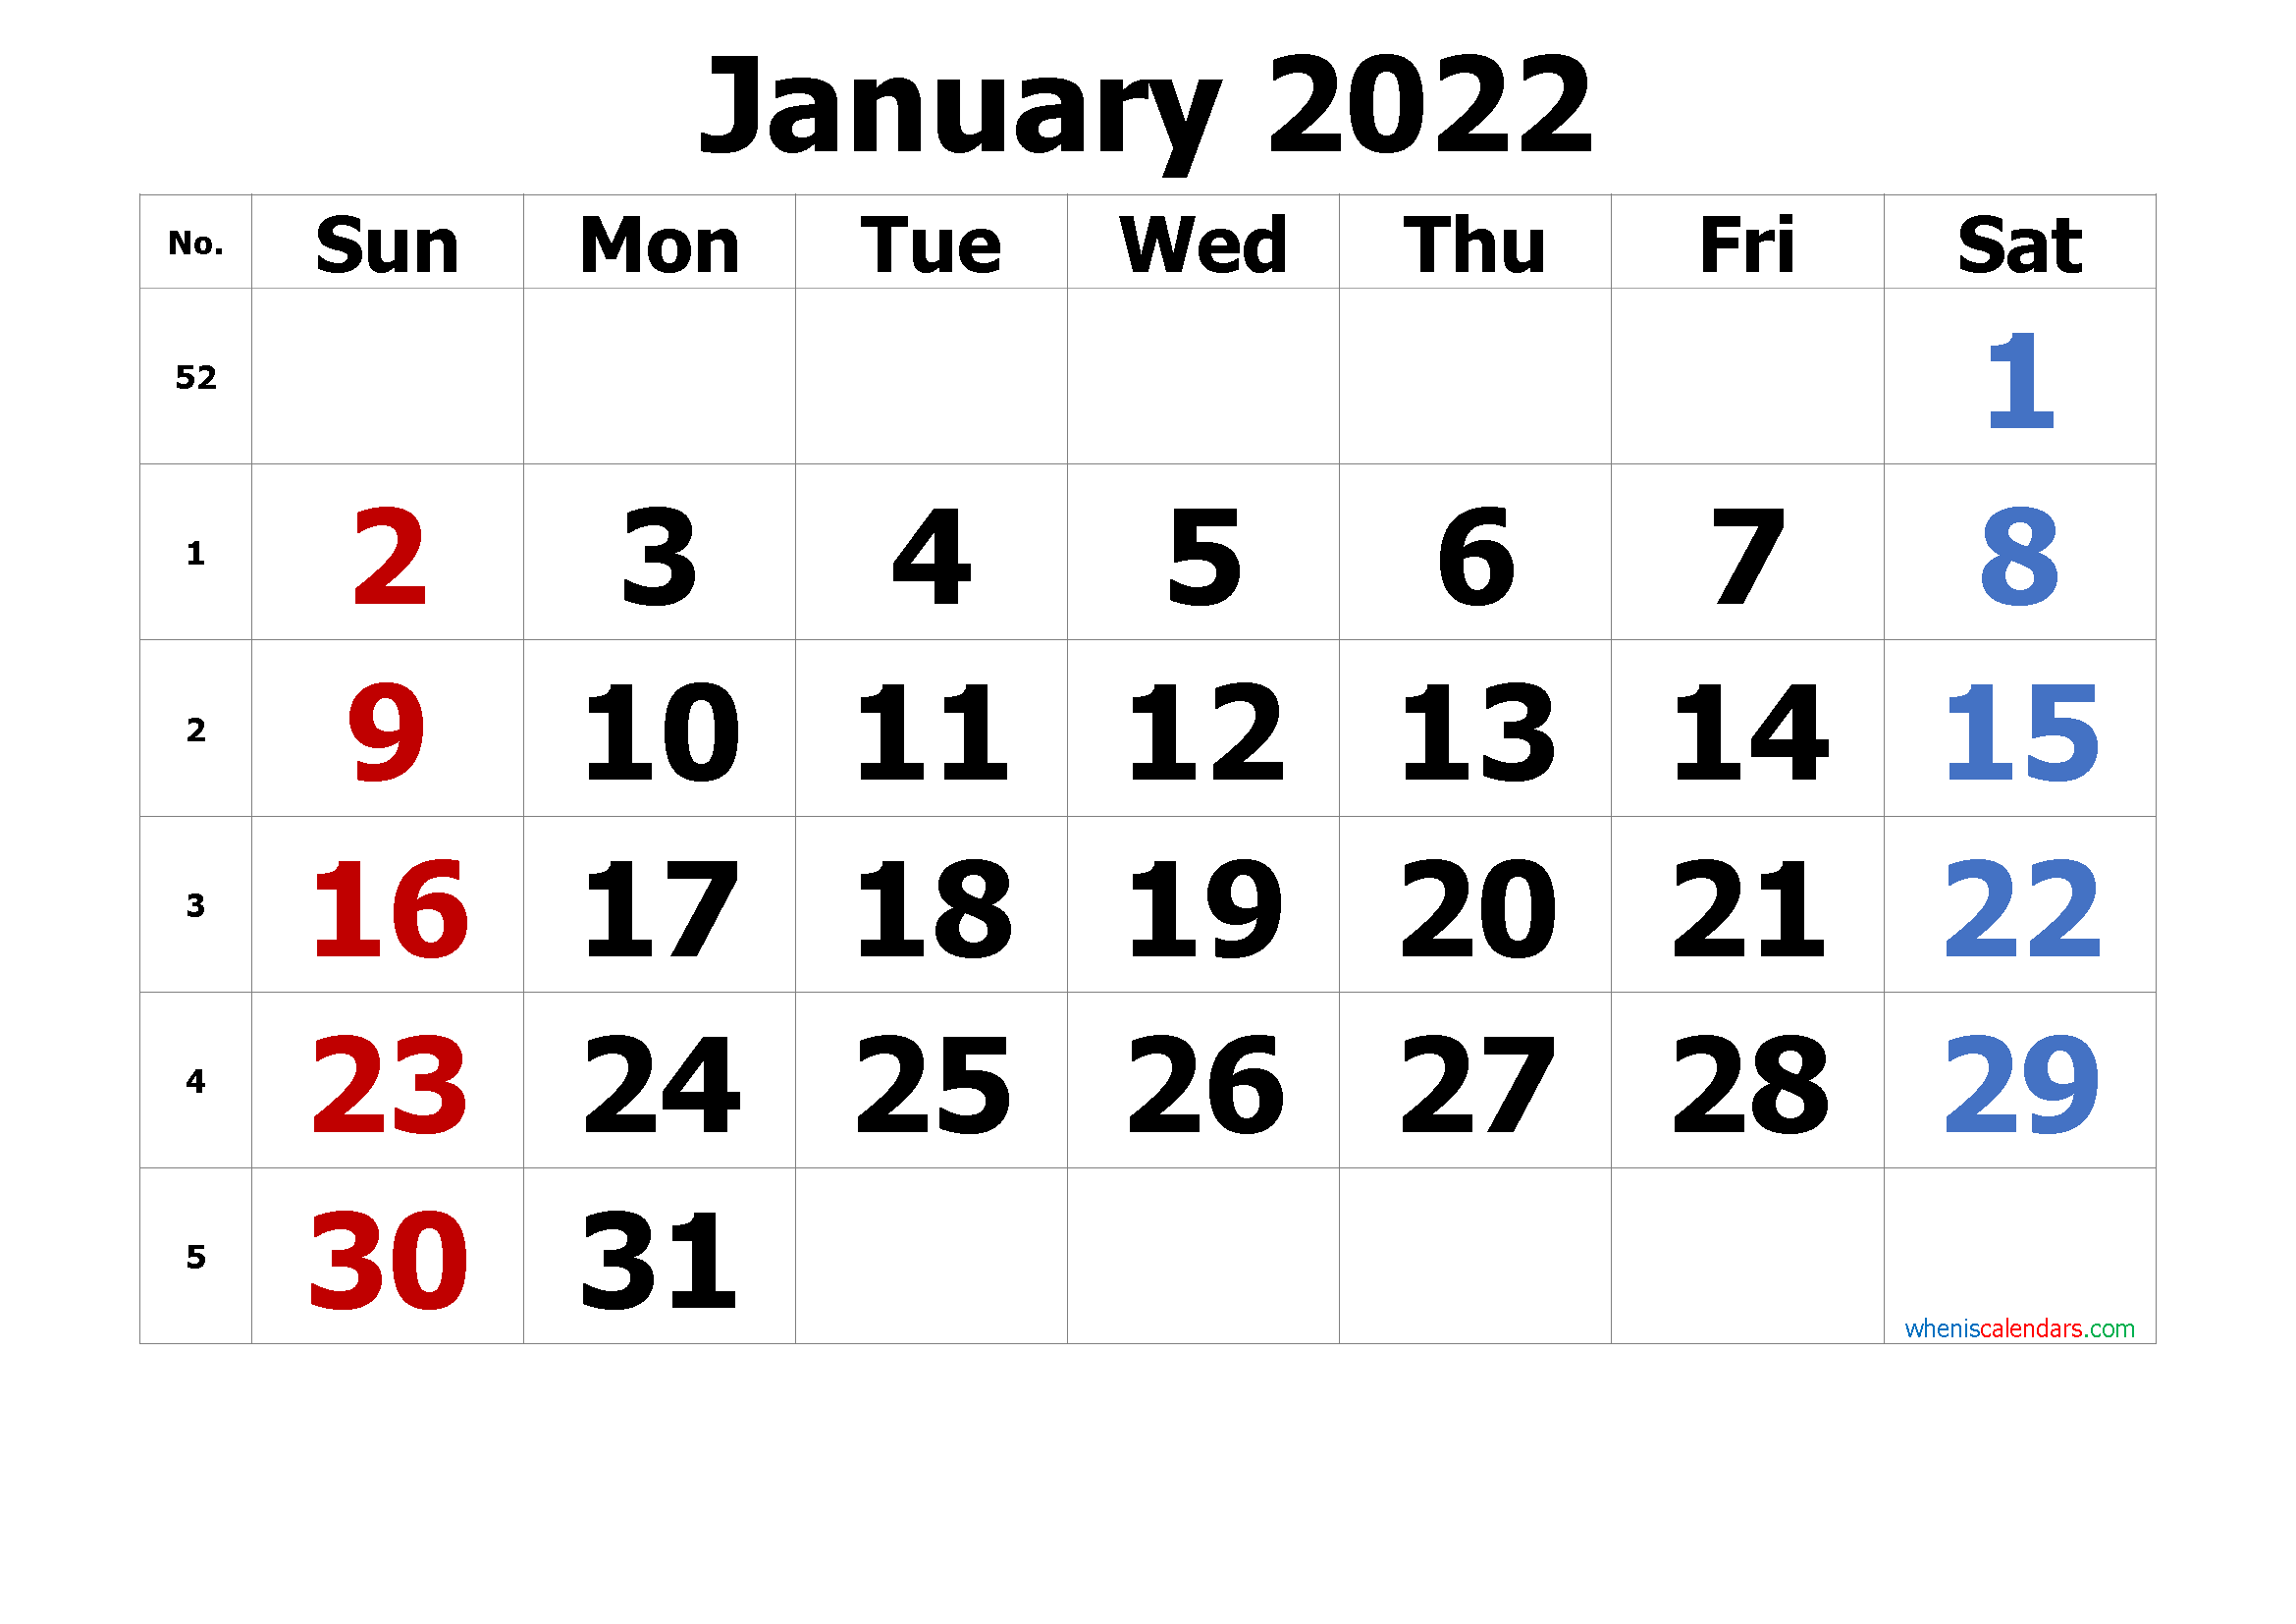 Free Printable January 2022 Calendars